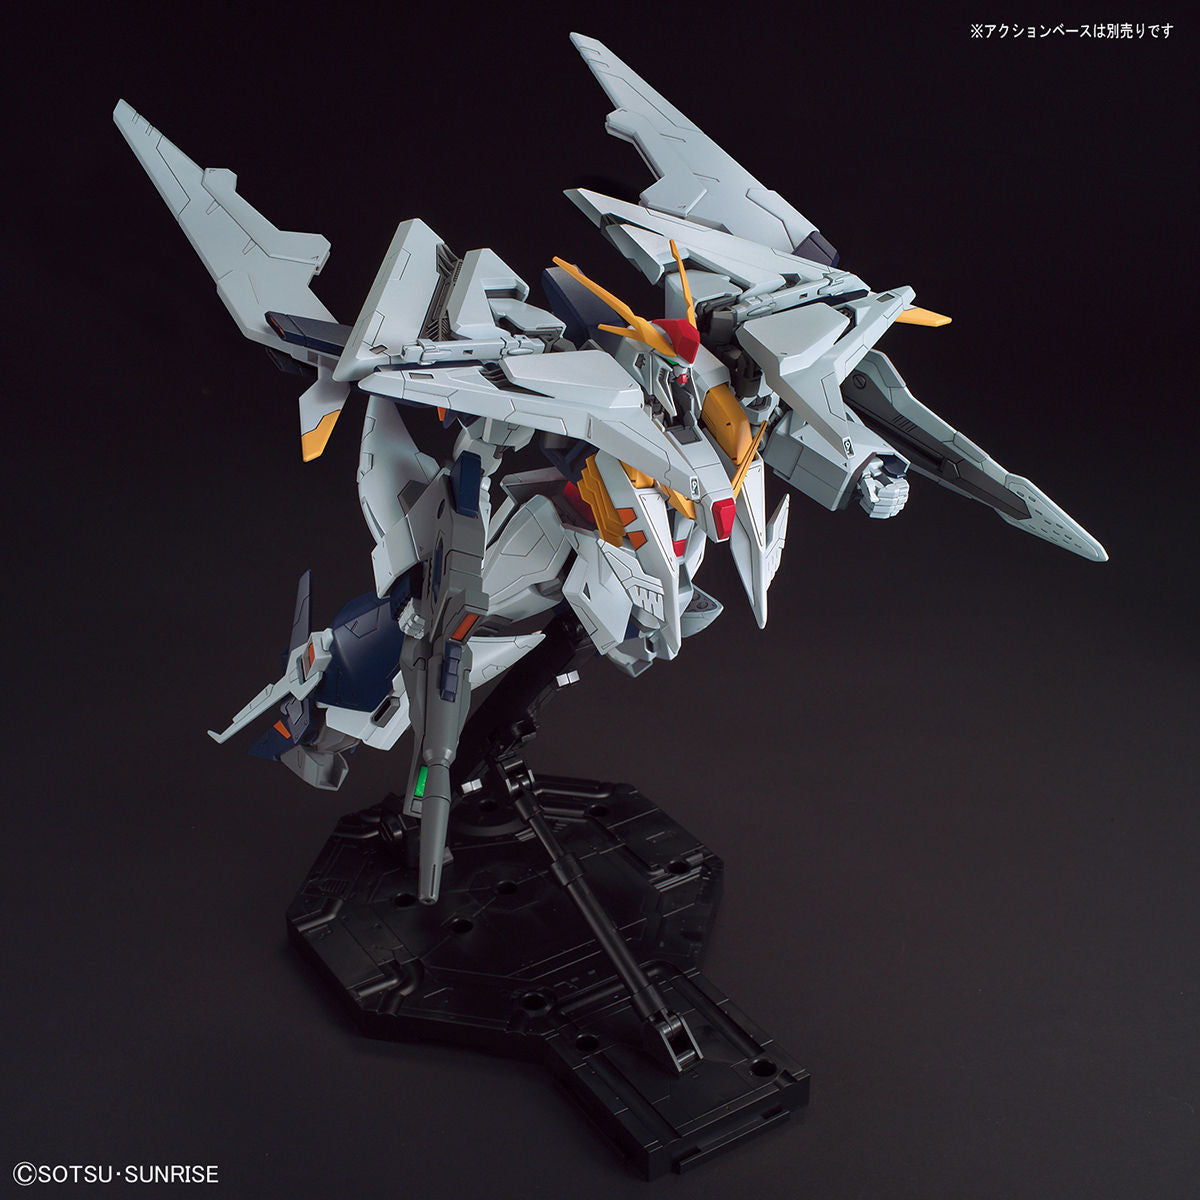 HGUC 1/144 Xi Gundam - Glacier Hobbies - Bandai